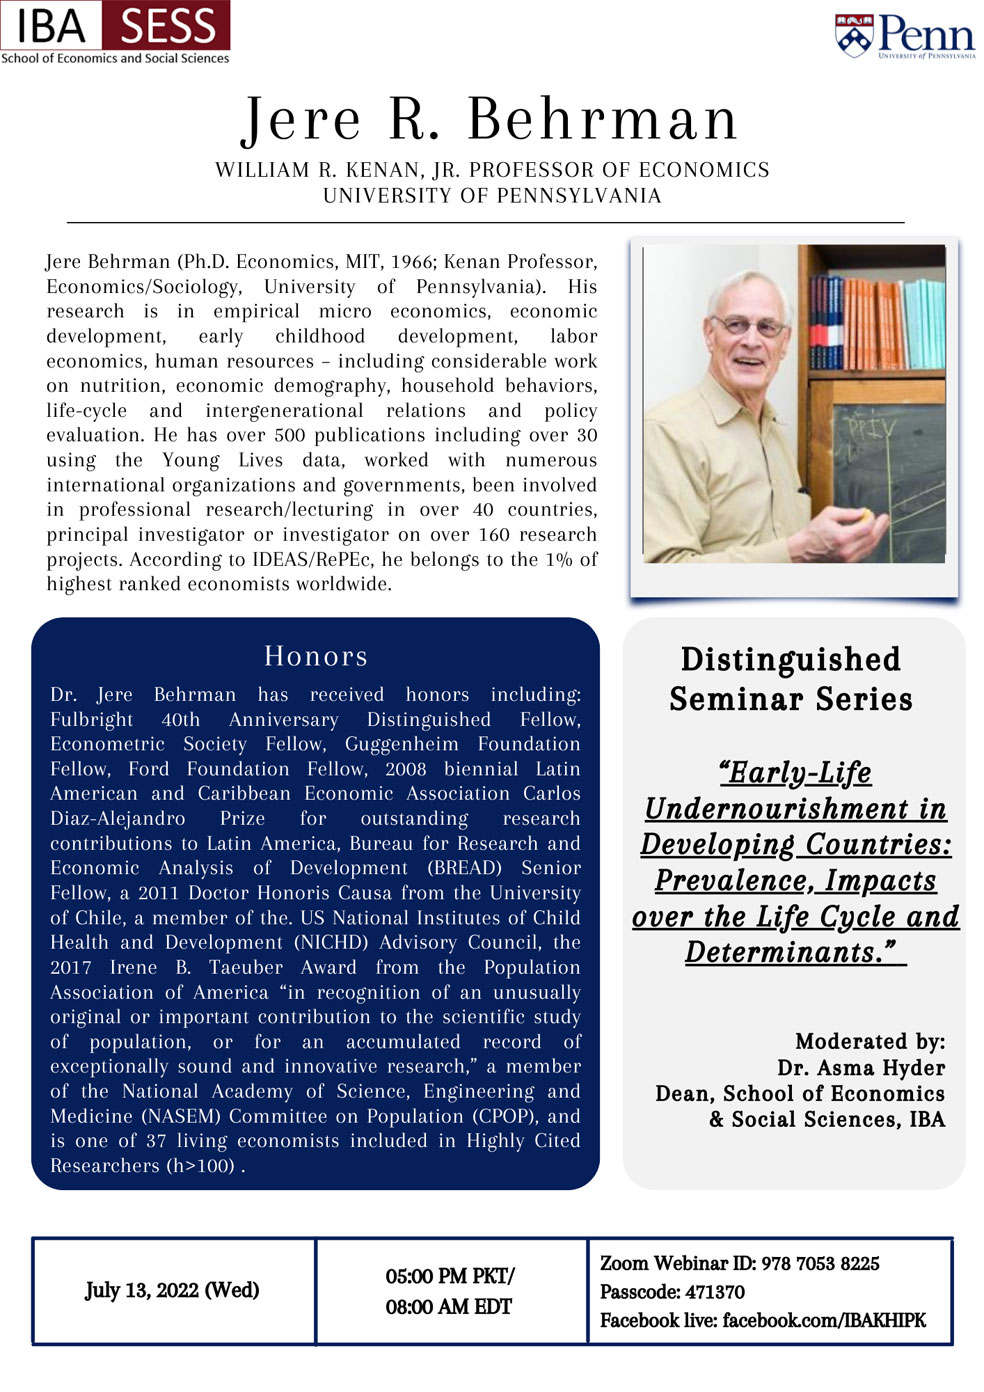 Distinguished Seminar Series | University of Pennsylvania | Session I